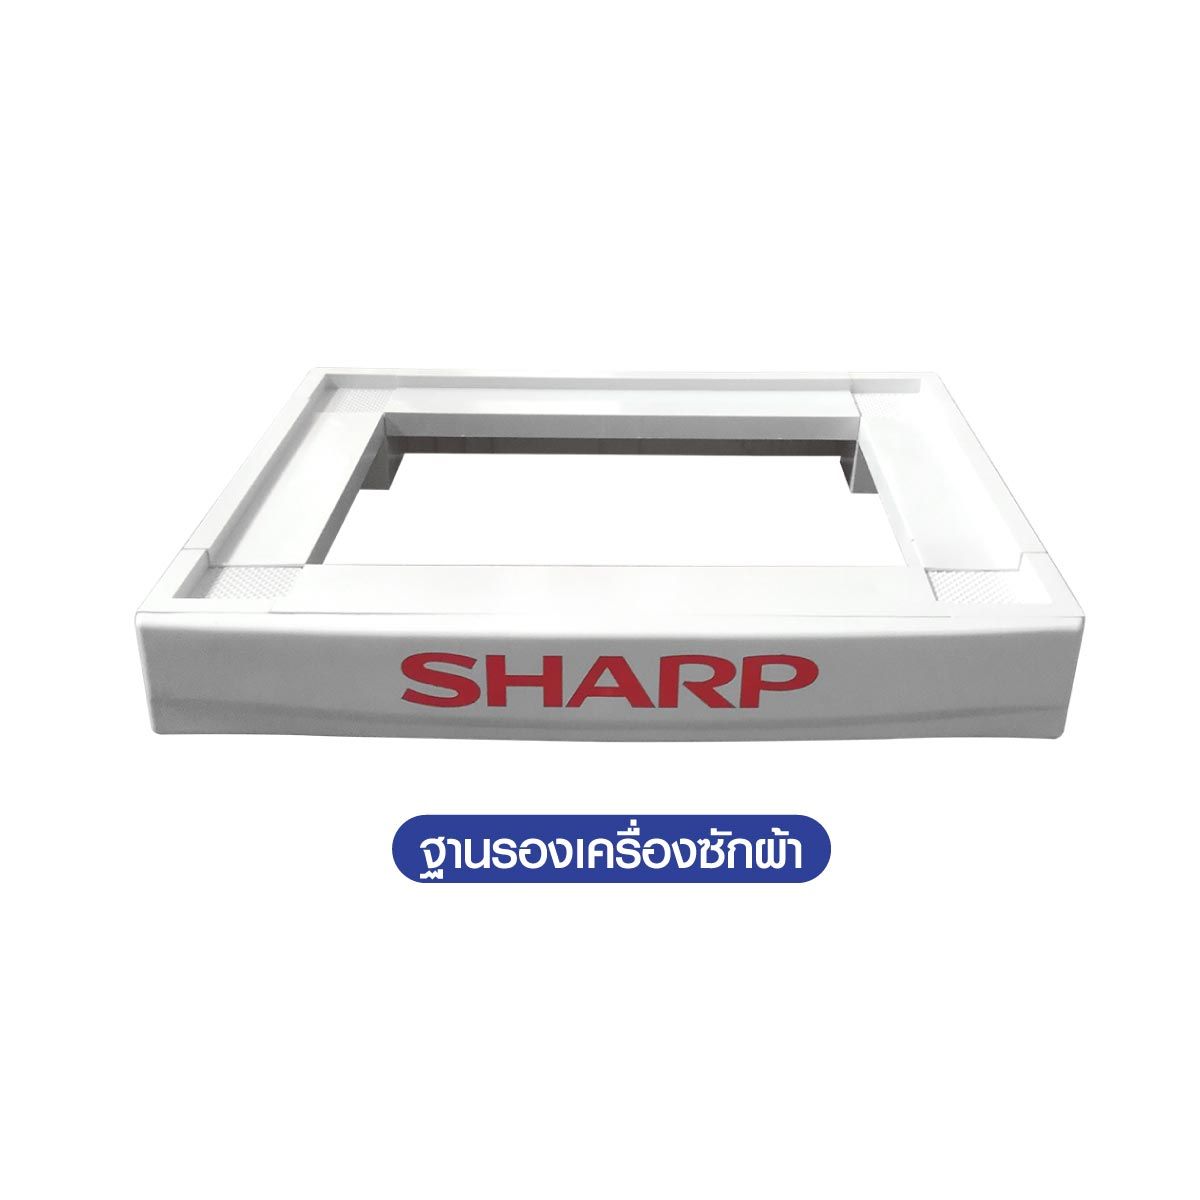 SHARP เครื่องซักผ้าฝาหน้า 10 Kg INVERTER,HONOR SE Series สีขาว รุ่น ES-FH10AT-W